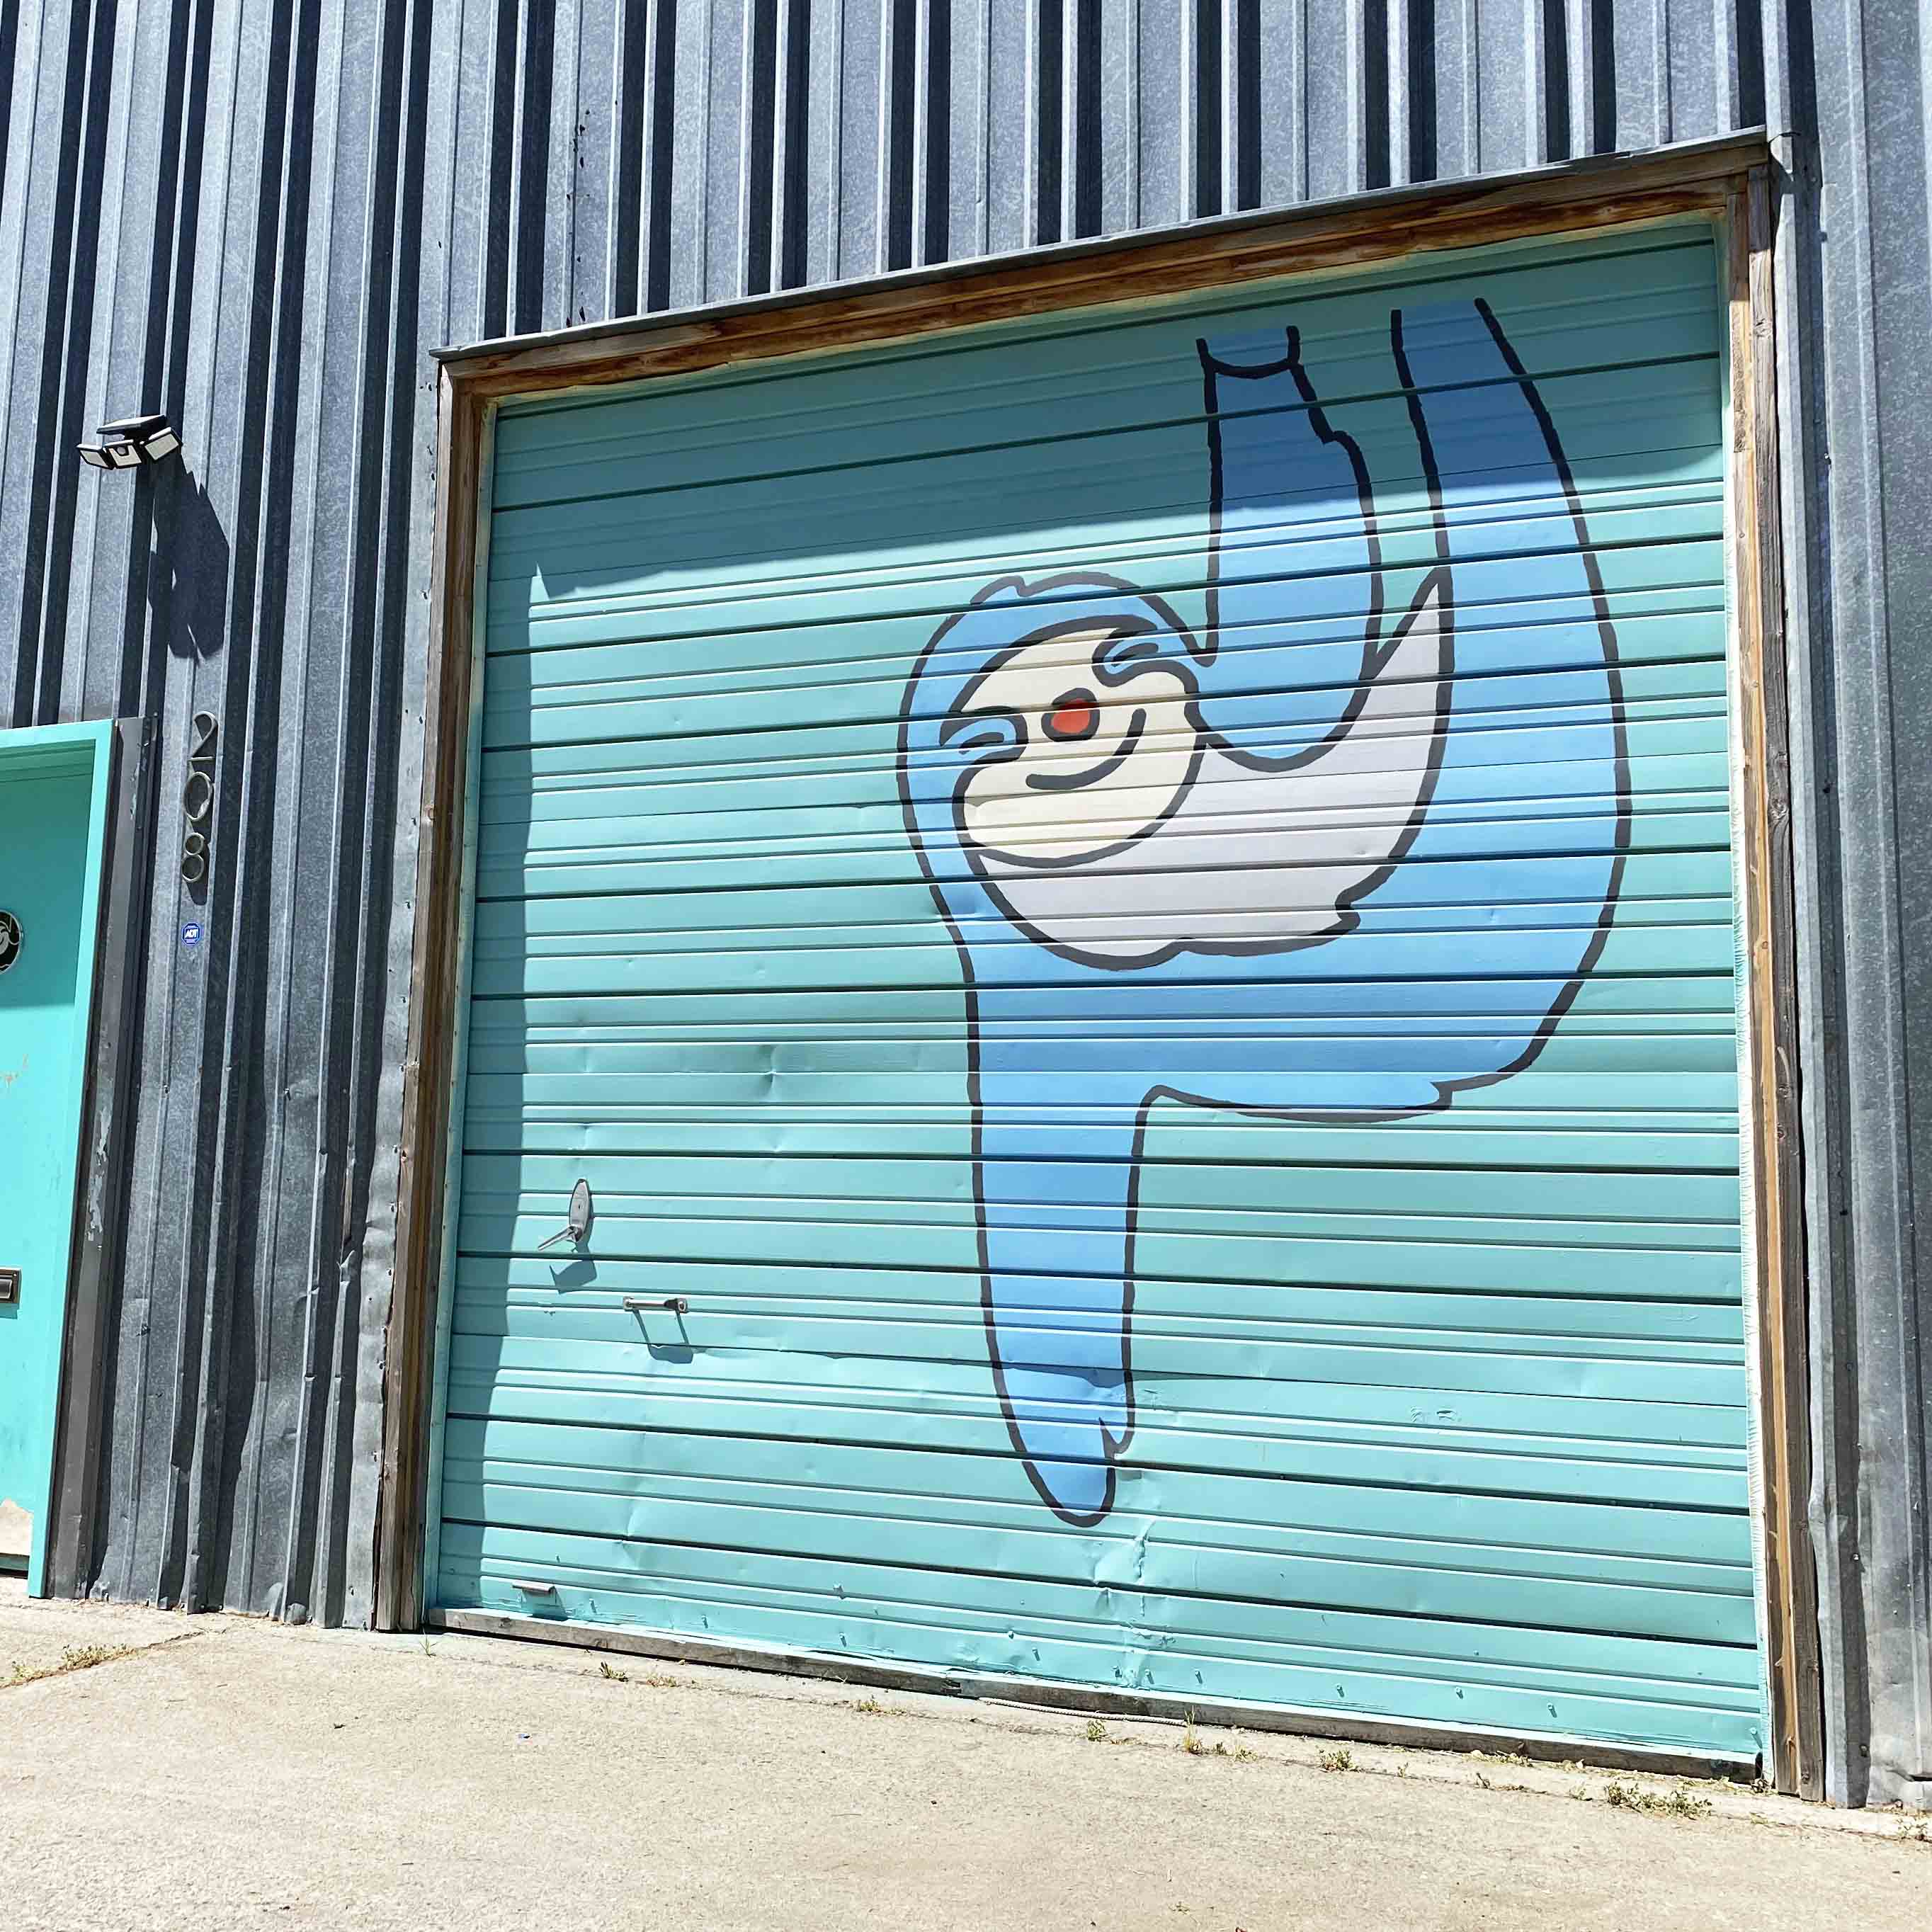 Large Sloth Stencil on Garage Door